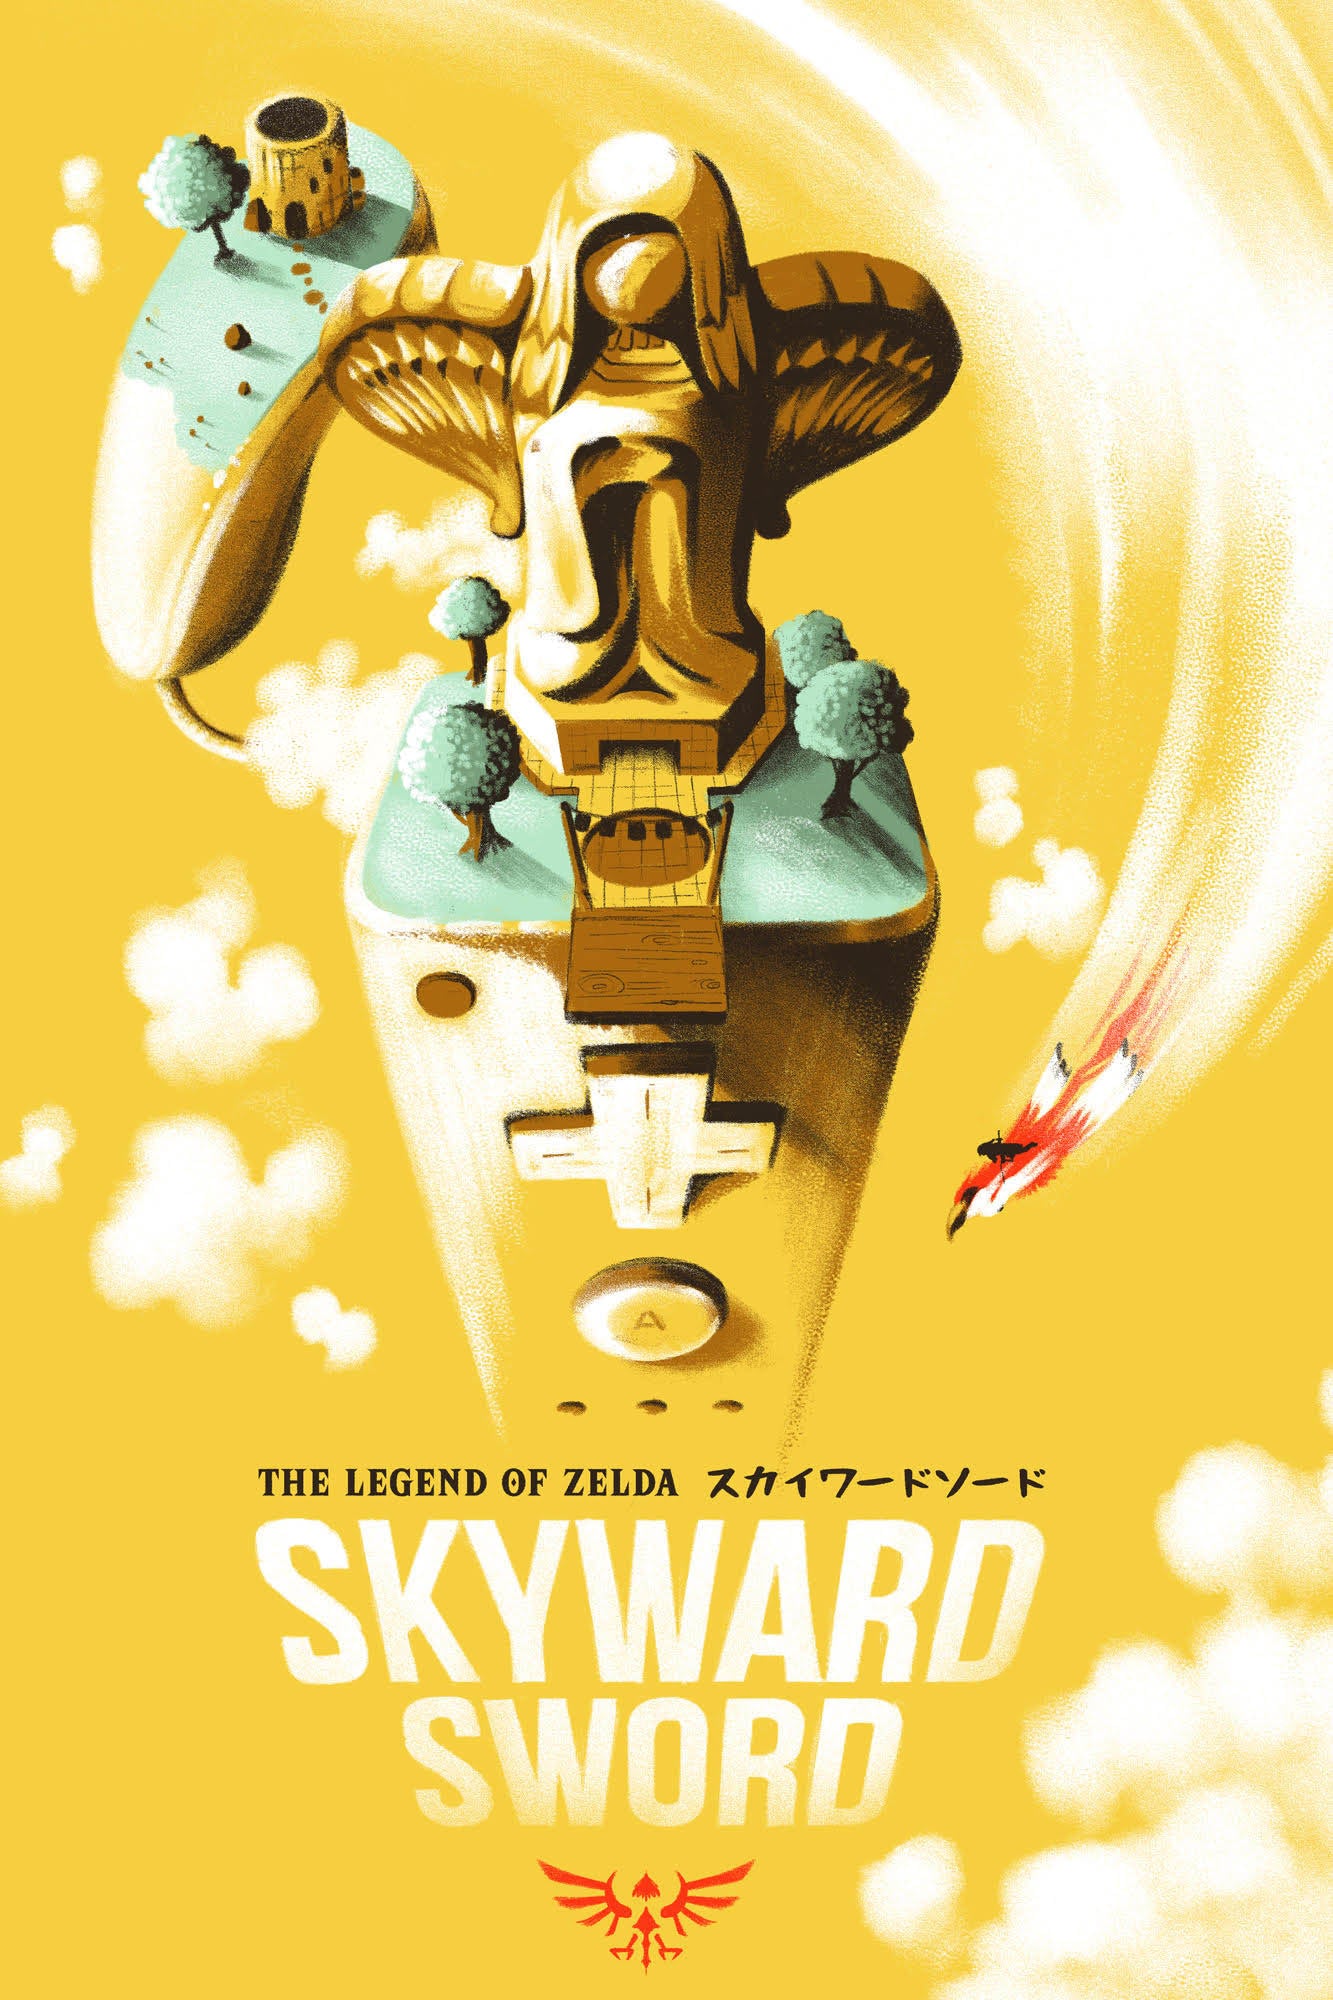 Lyndon Willoughby "Skyward Sword"